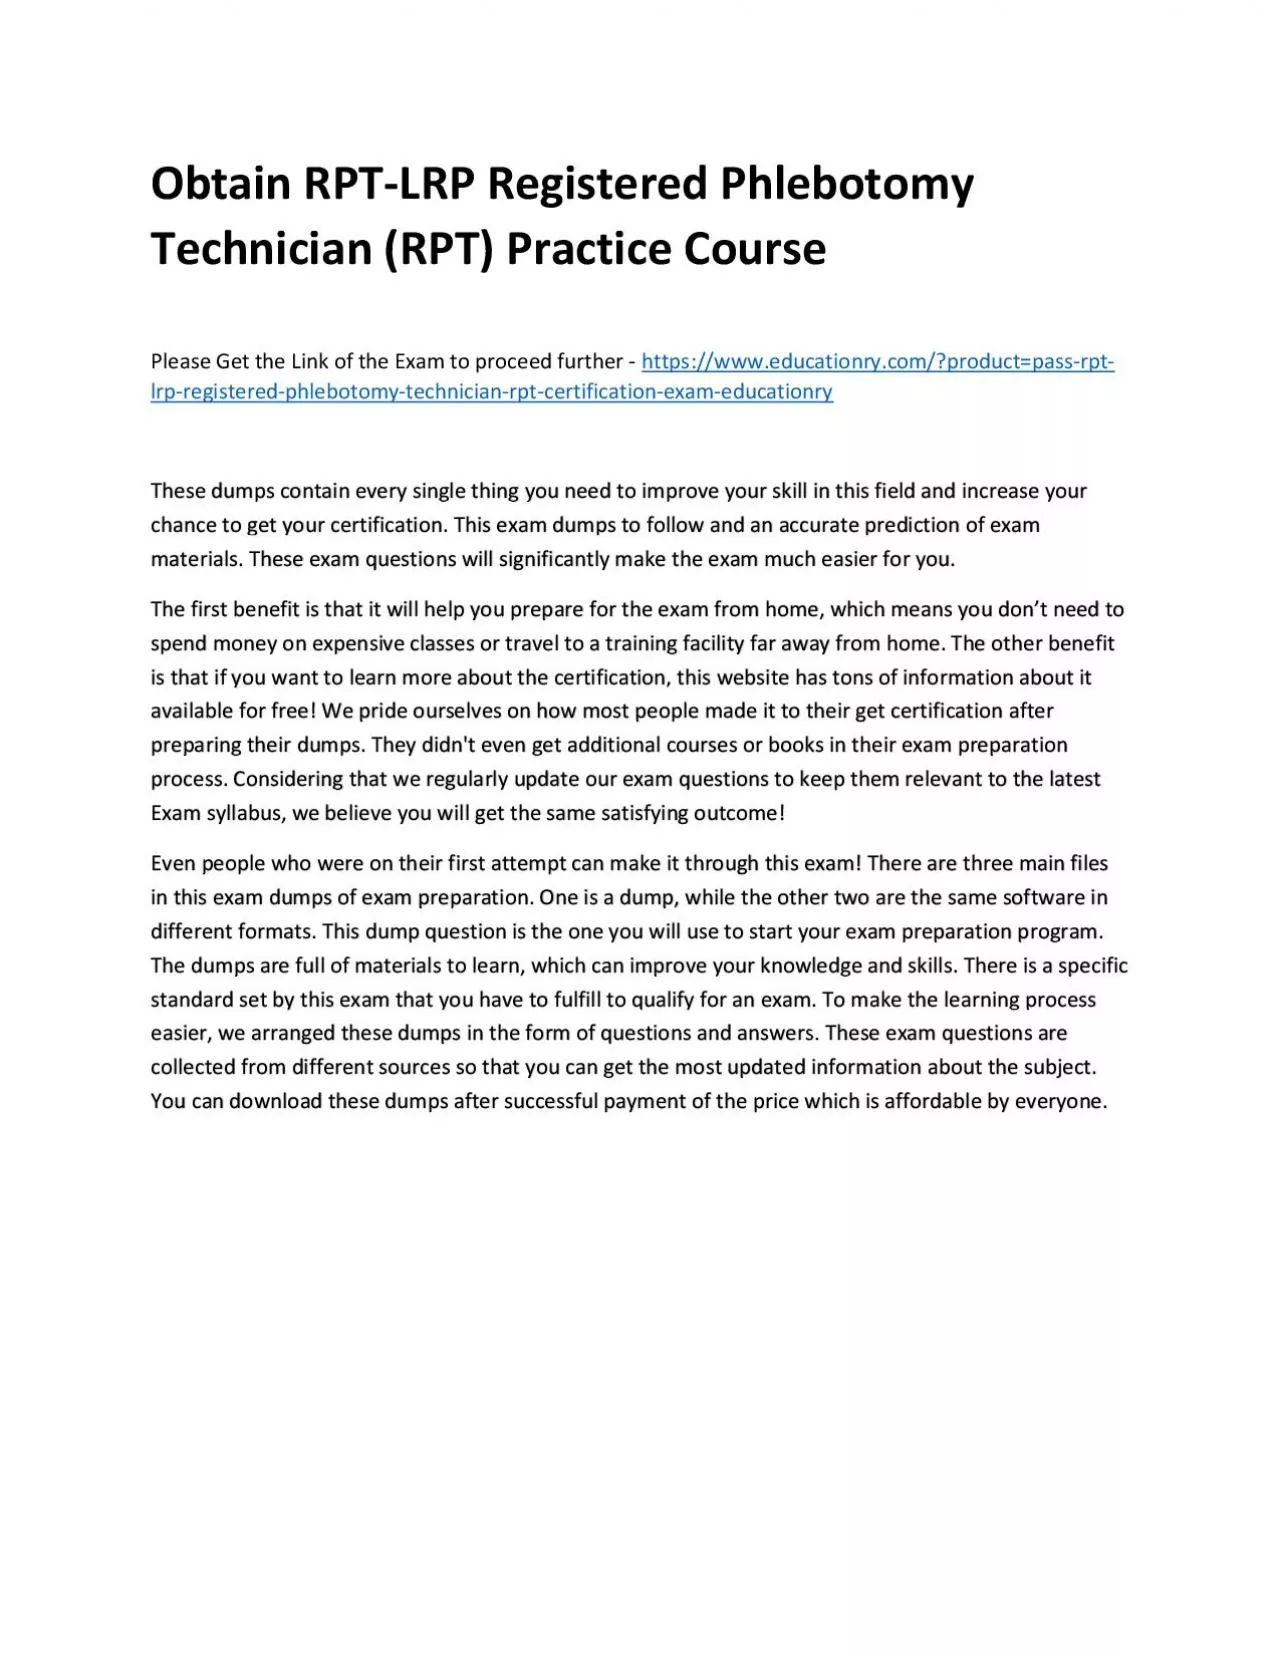 Obtain RPT-LRP Registered Phlebotomy Technician (RPT) Practice Course